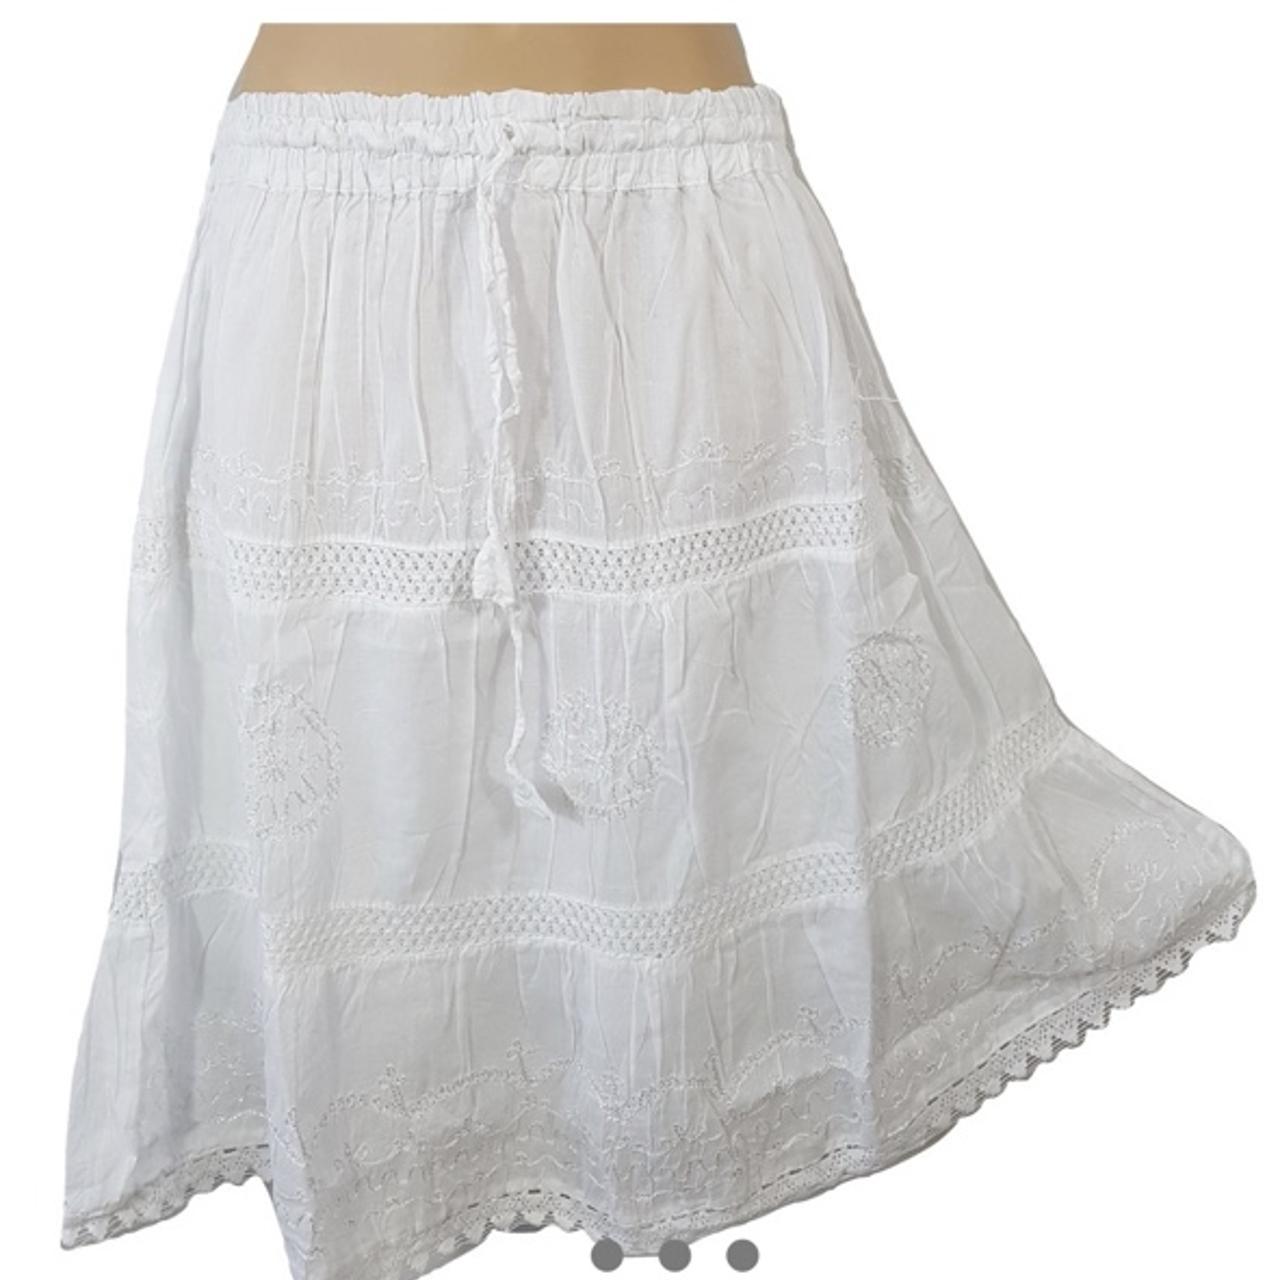 Repop! Hippie style white midi skirt Elasticated... - Depop